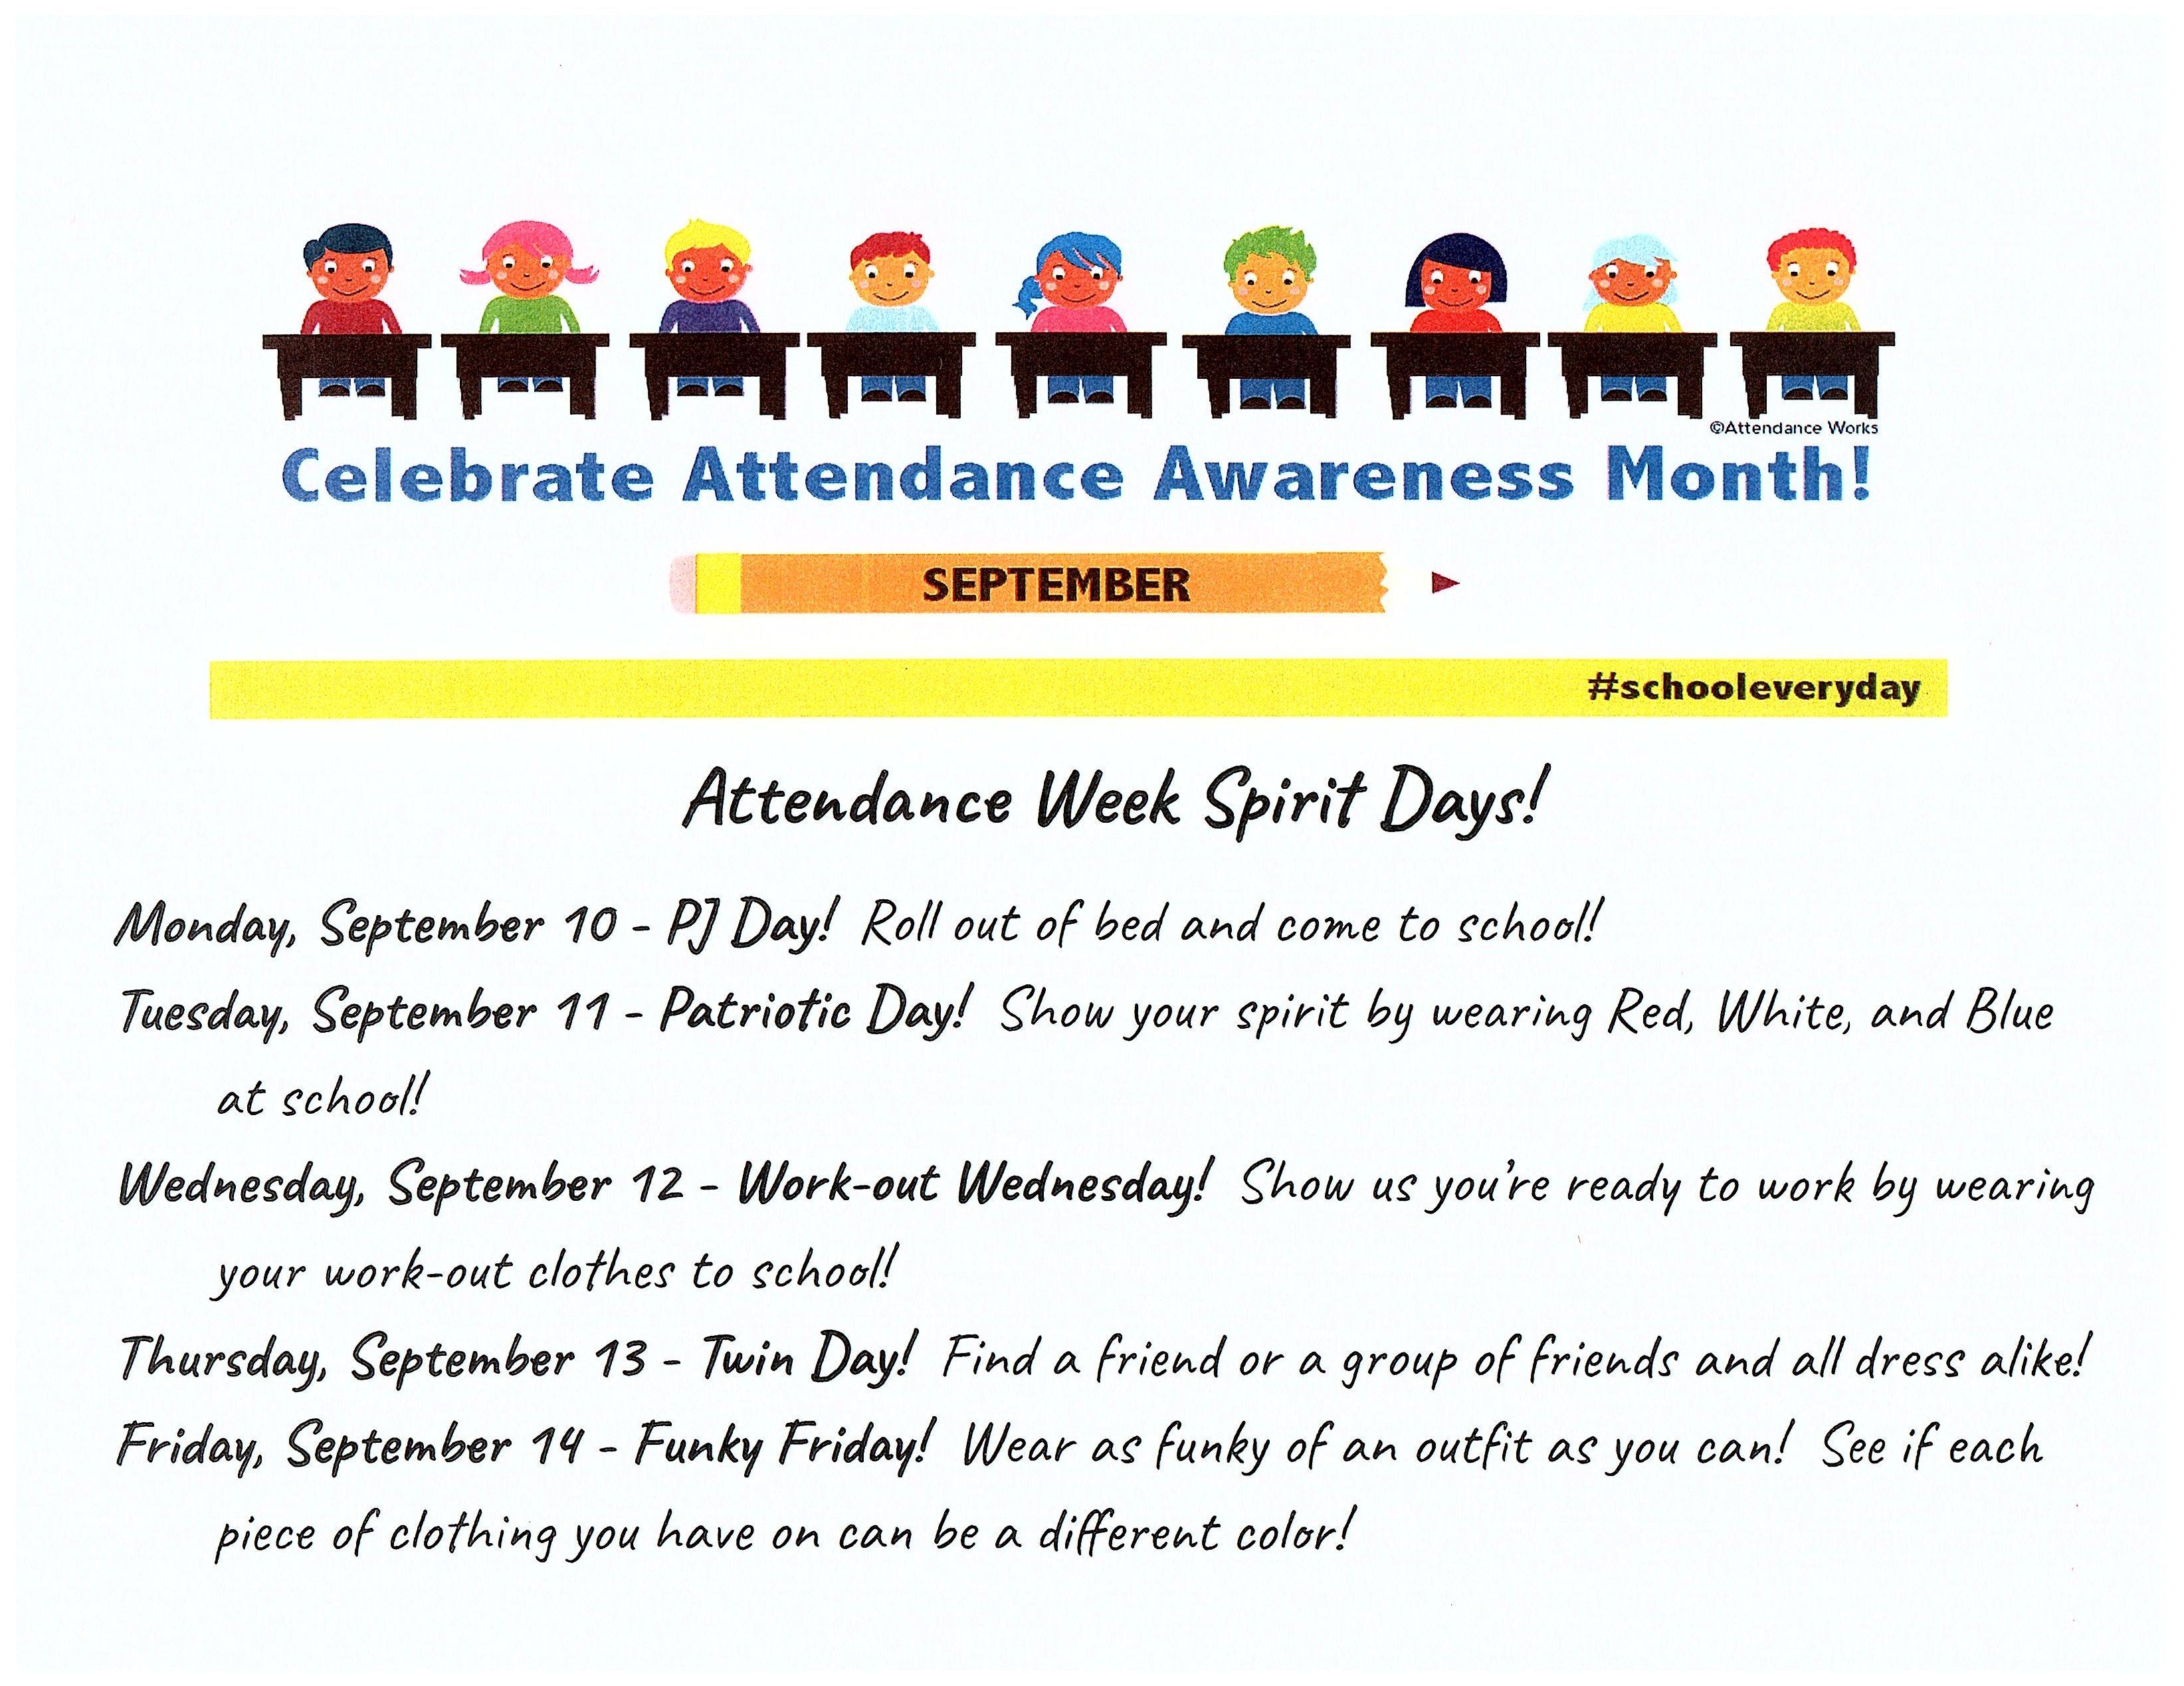 Celebrate Attendance Awareness Month - September